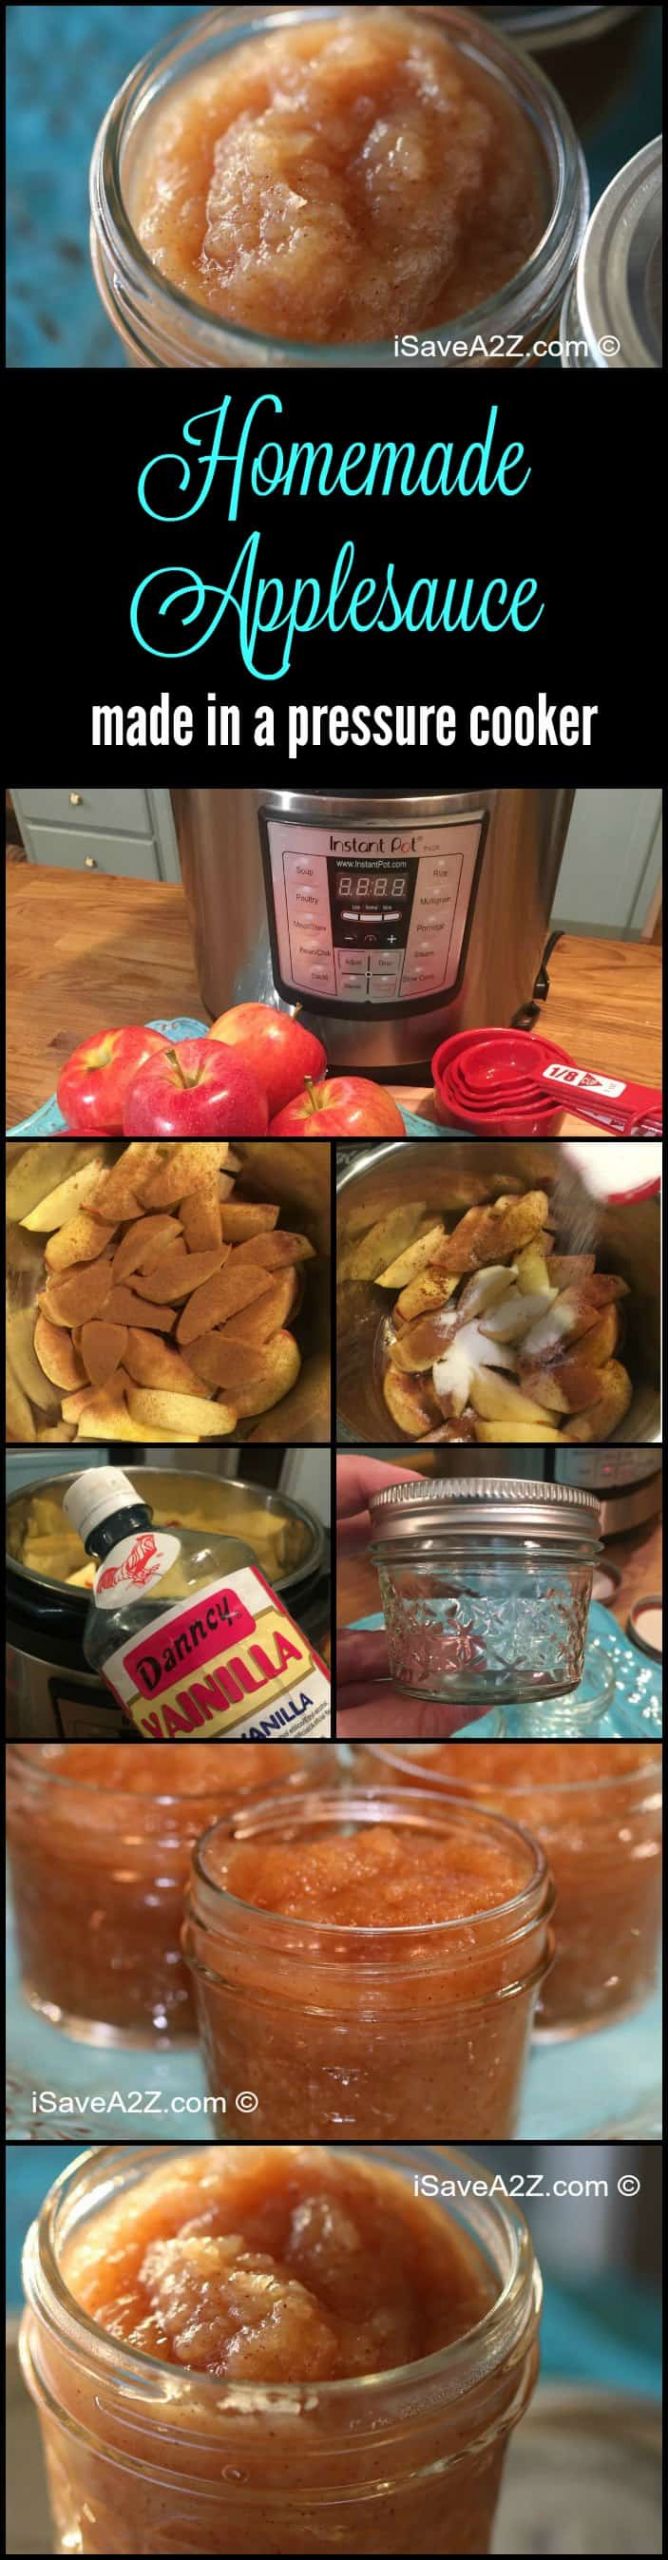 Applesauce Pressure Cooker
 Homemade Pressure Cooker Applesauce Recipe iSaveA2Z